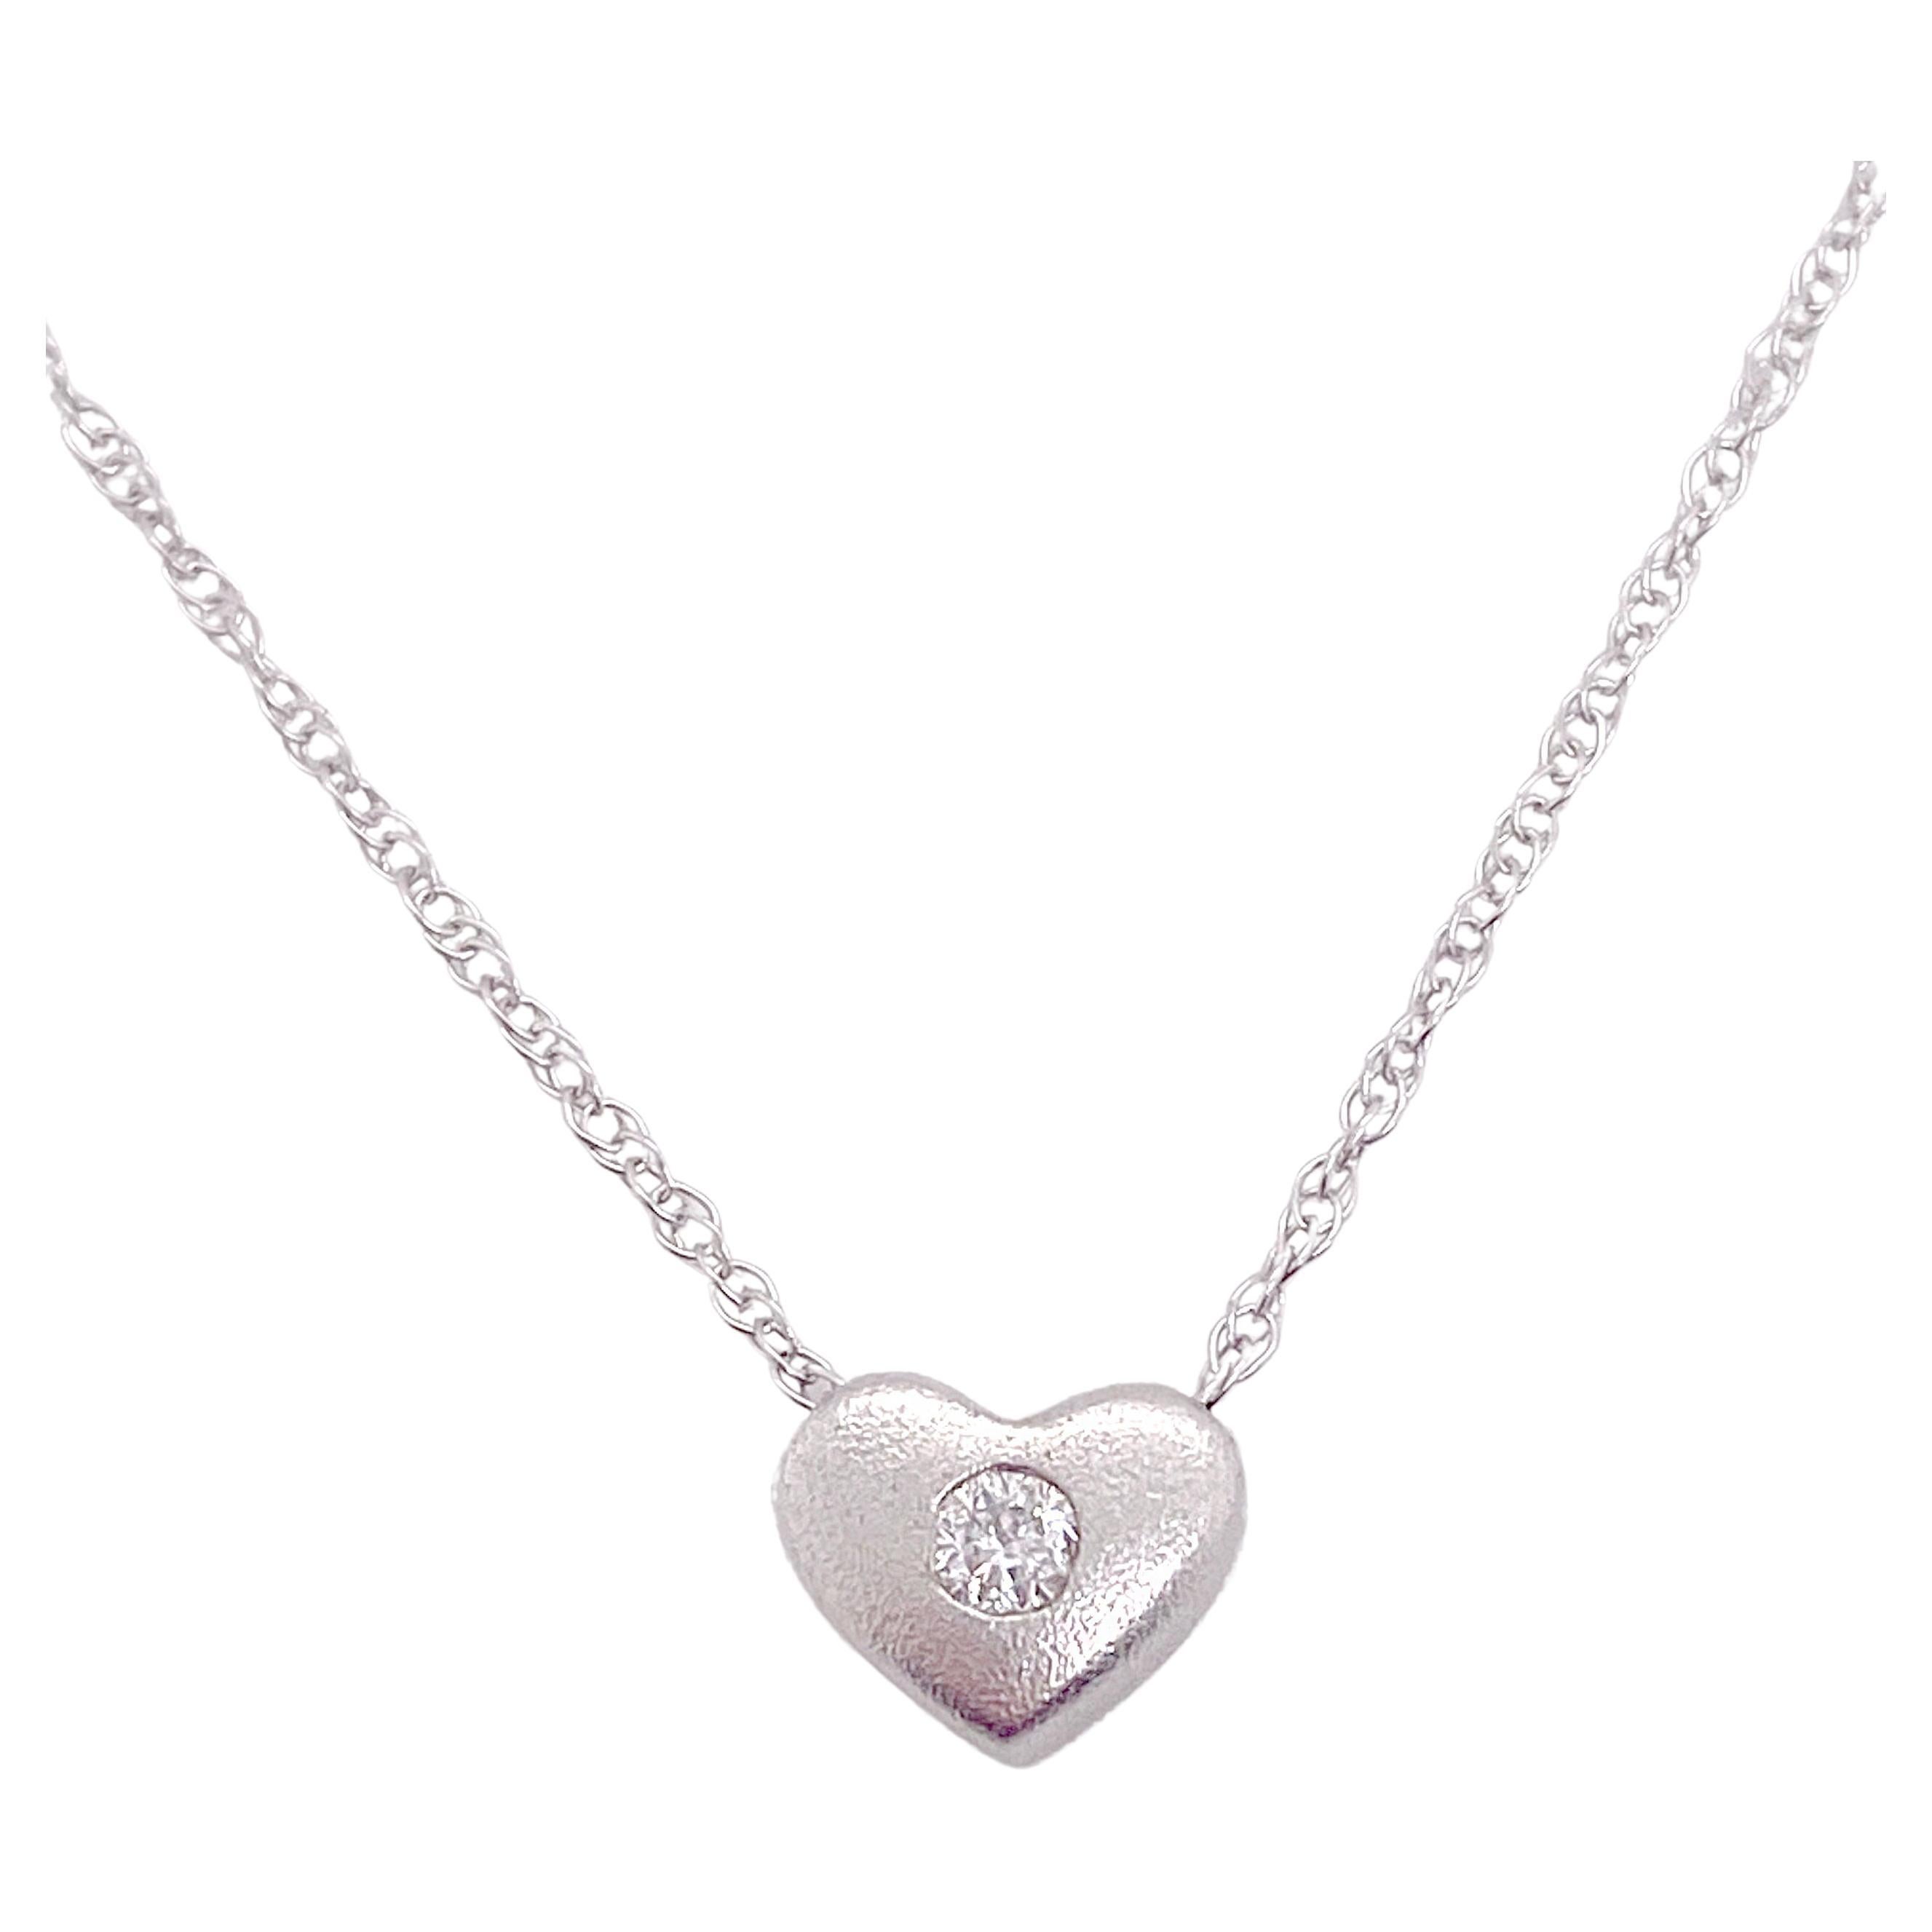 Diamond Heart Necklace, White Gold, One of a Kind Diamond Heart Pendant